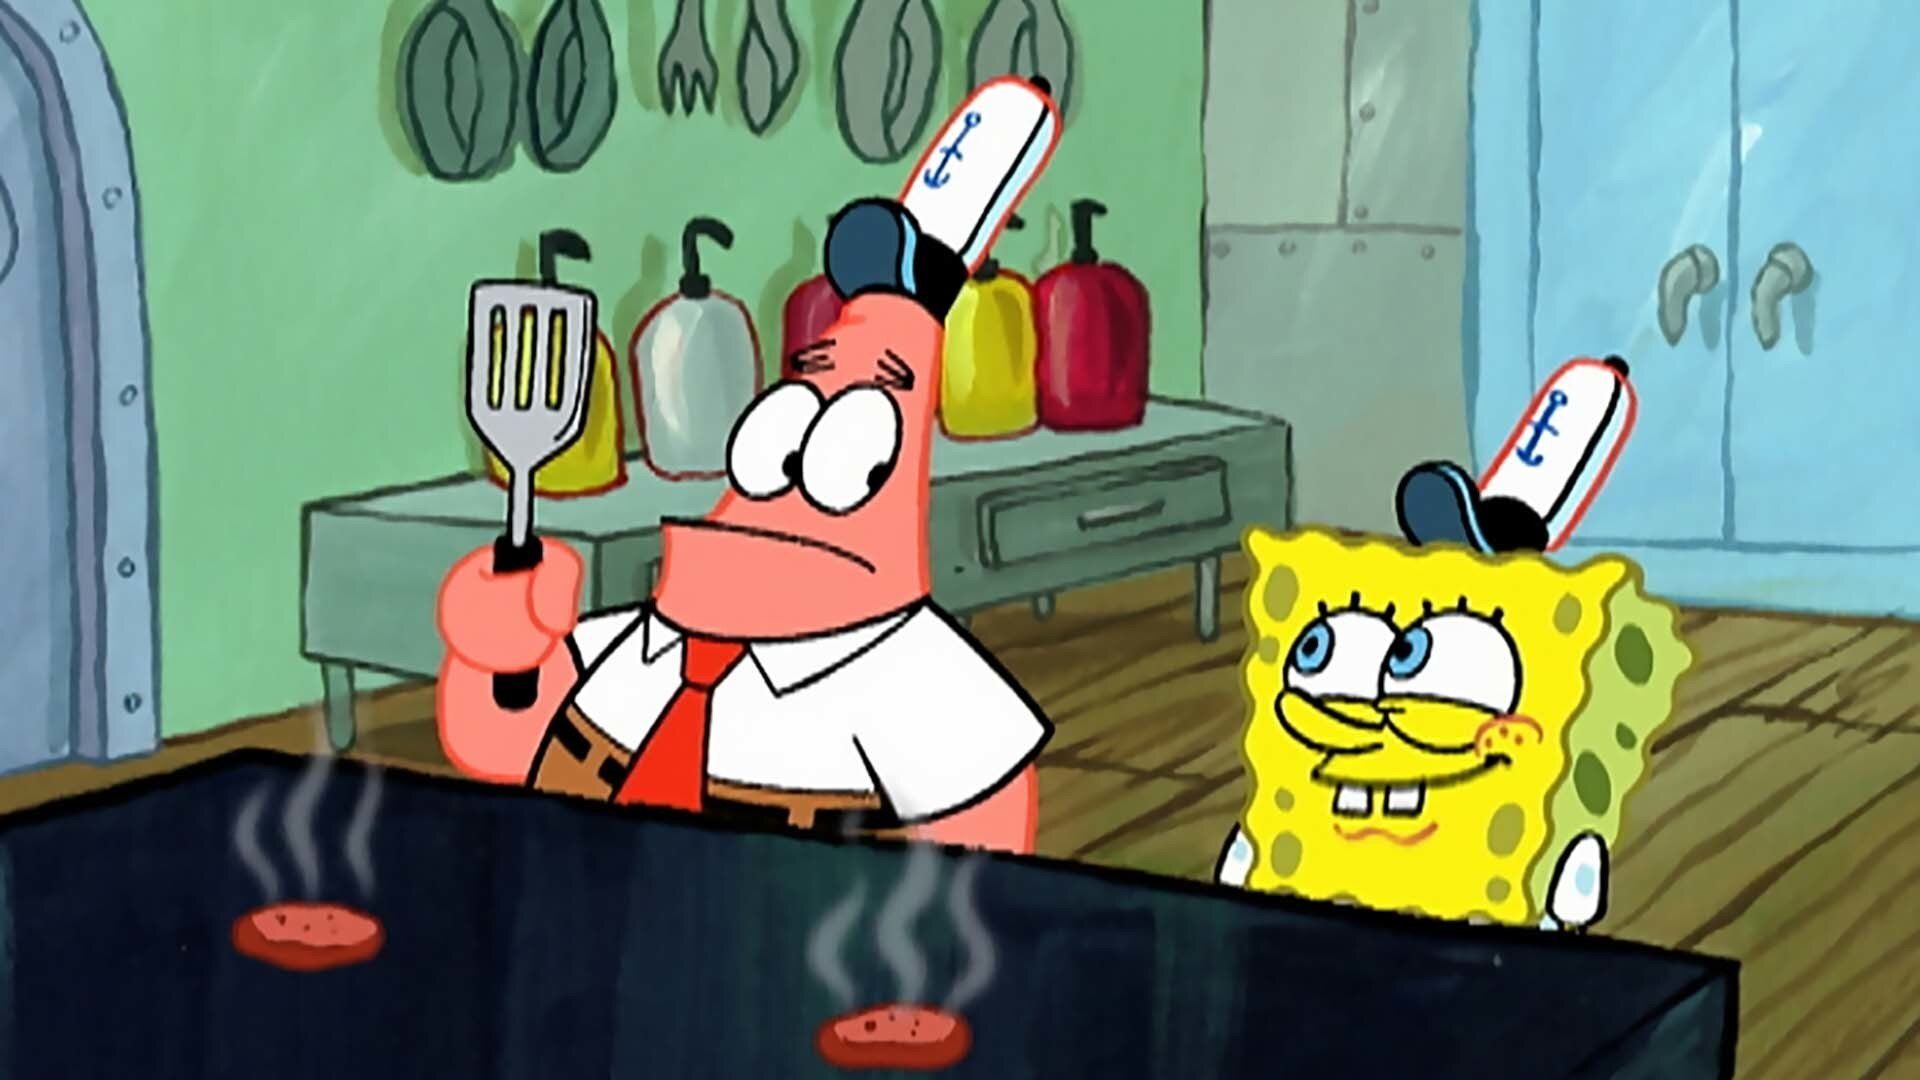 Patrick and spongebob side by side in krusty krab